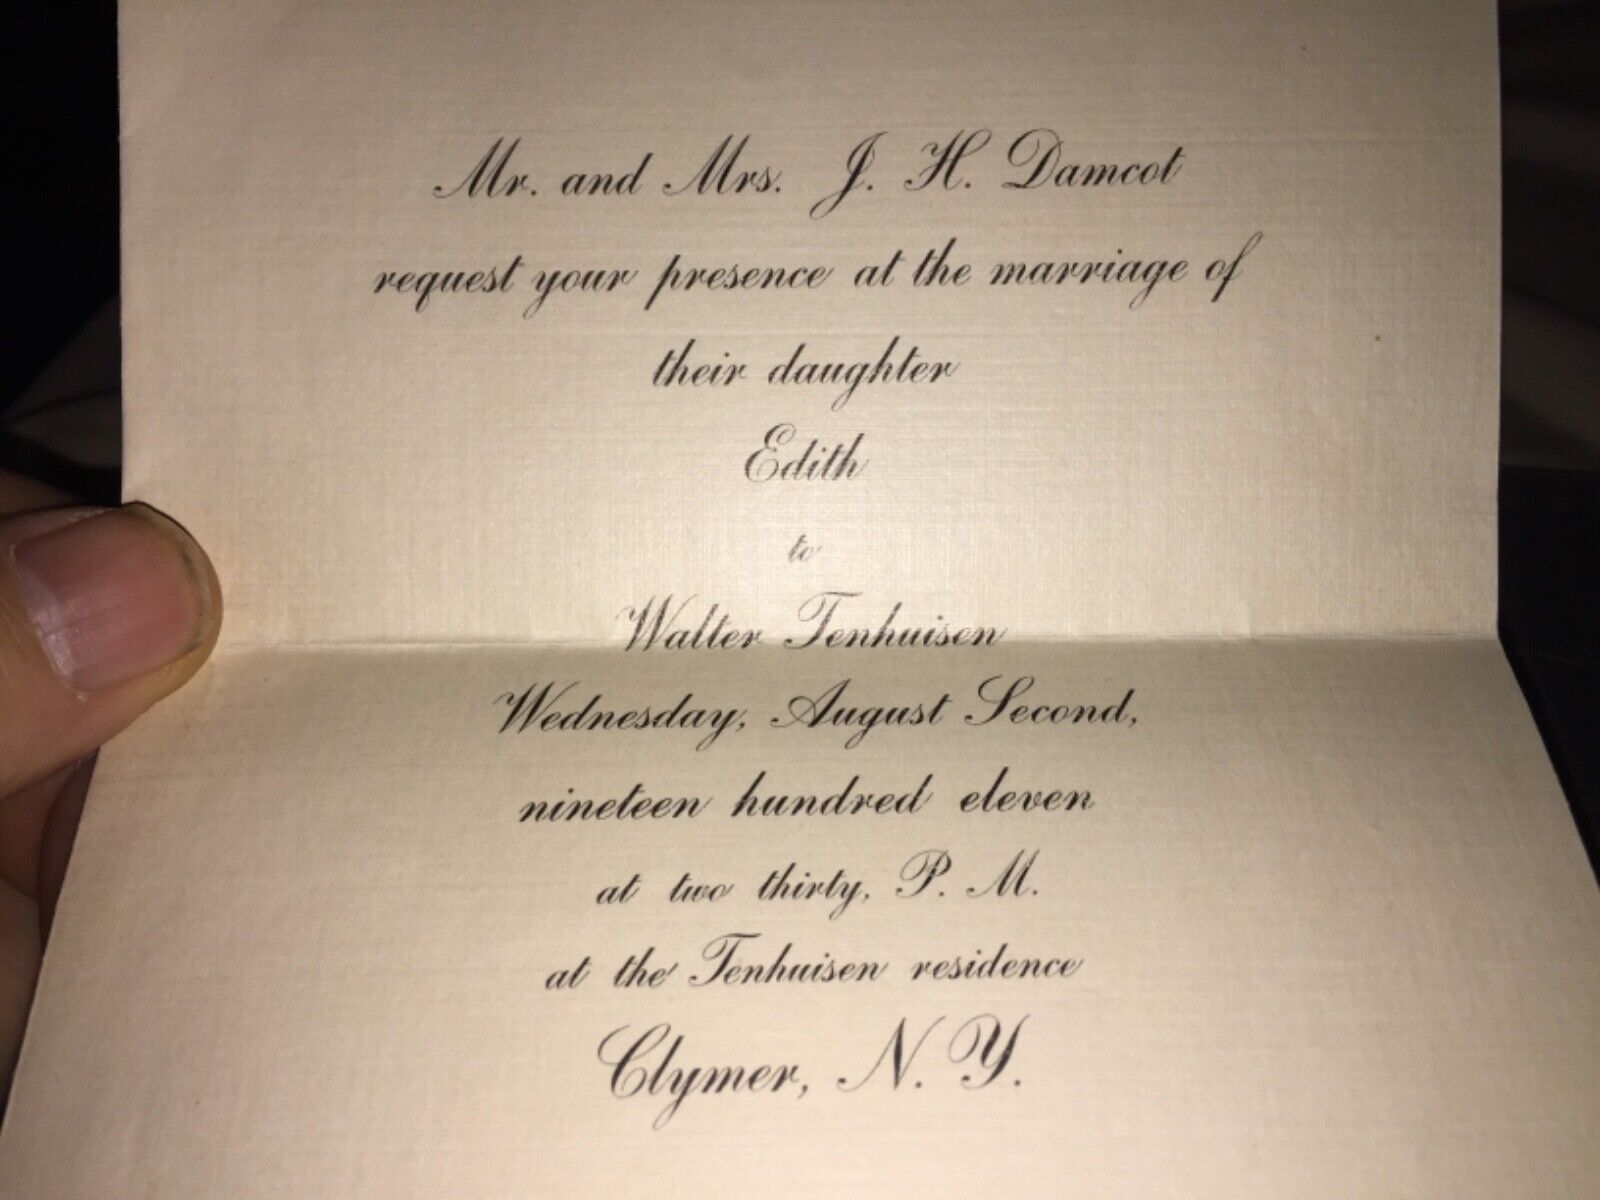 1911 WEDDING INVITATION FOR EDITH DAMCOT TO WALTER TENHUISEN CLYMER,NY